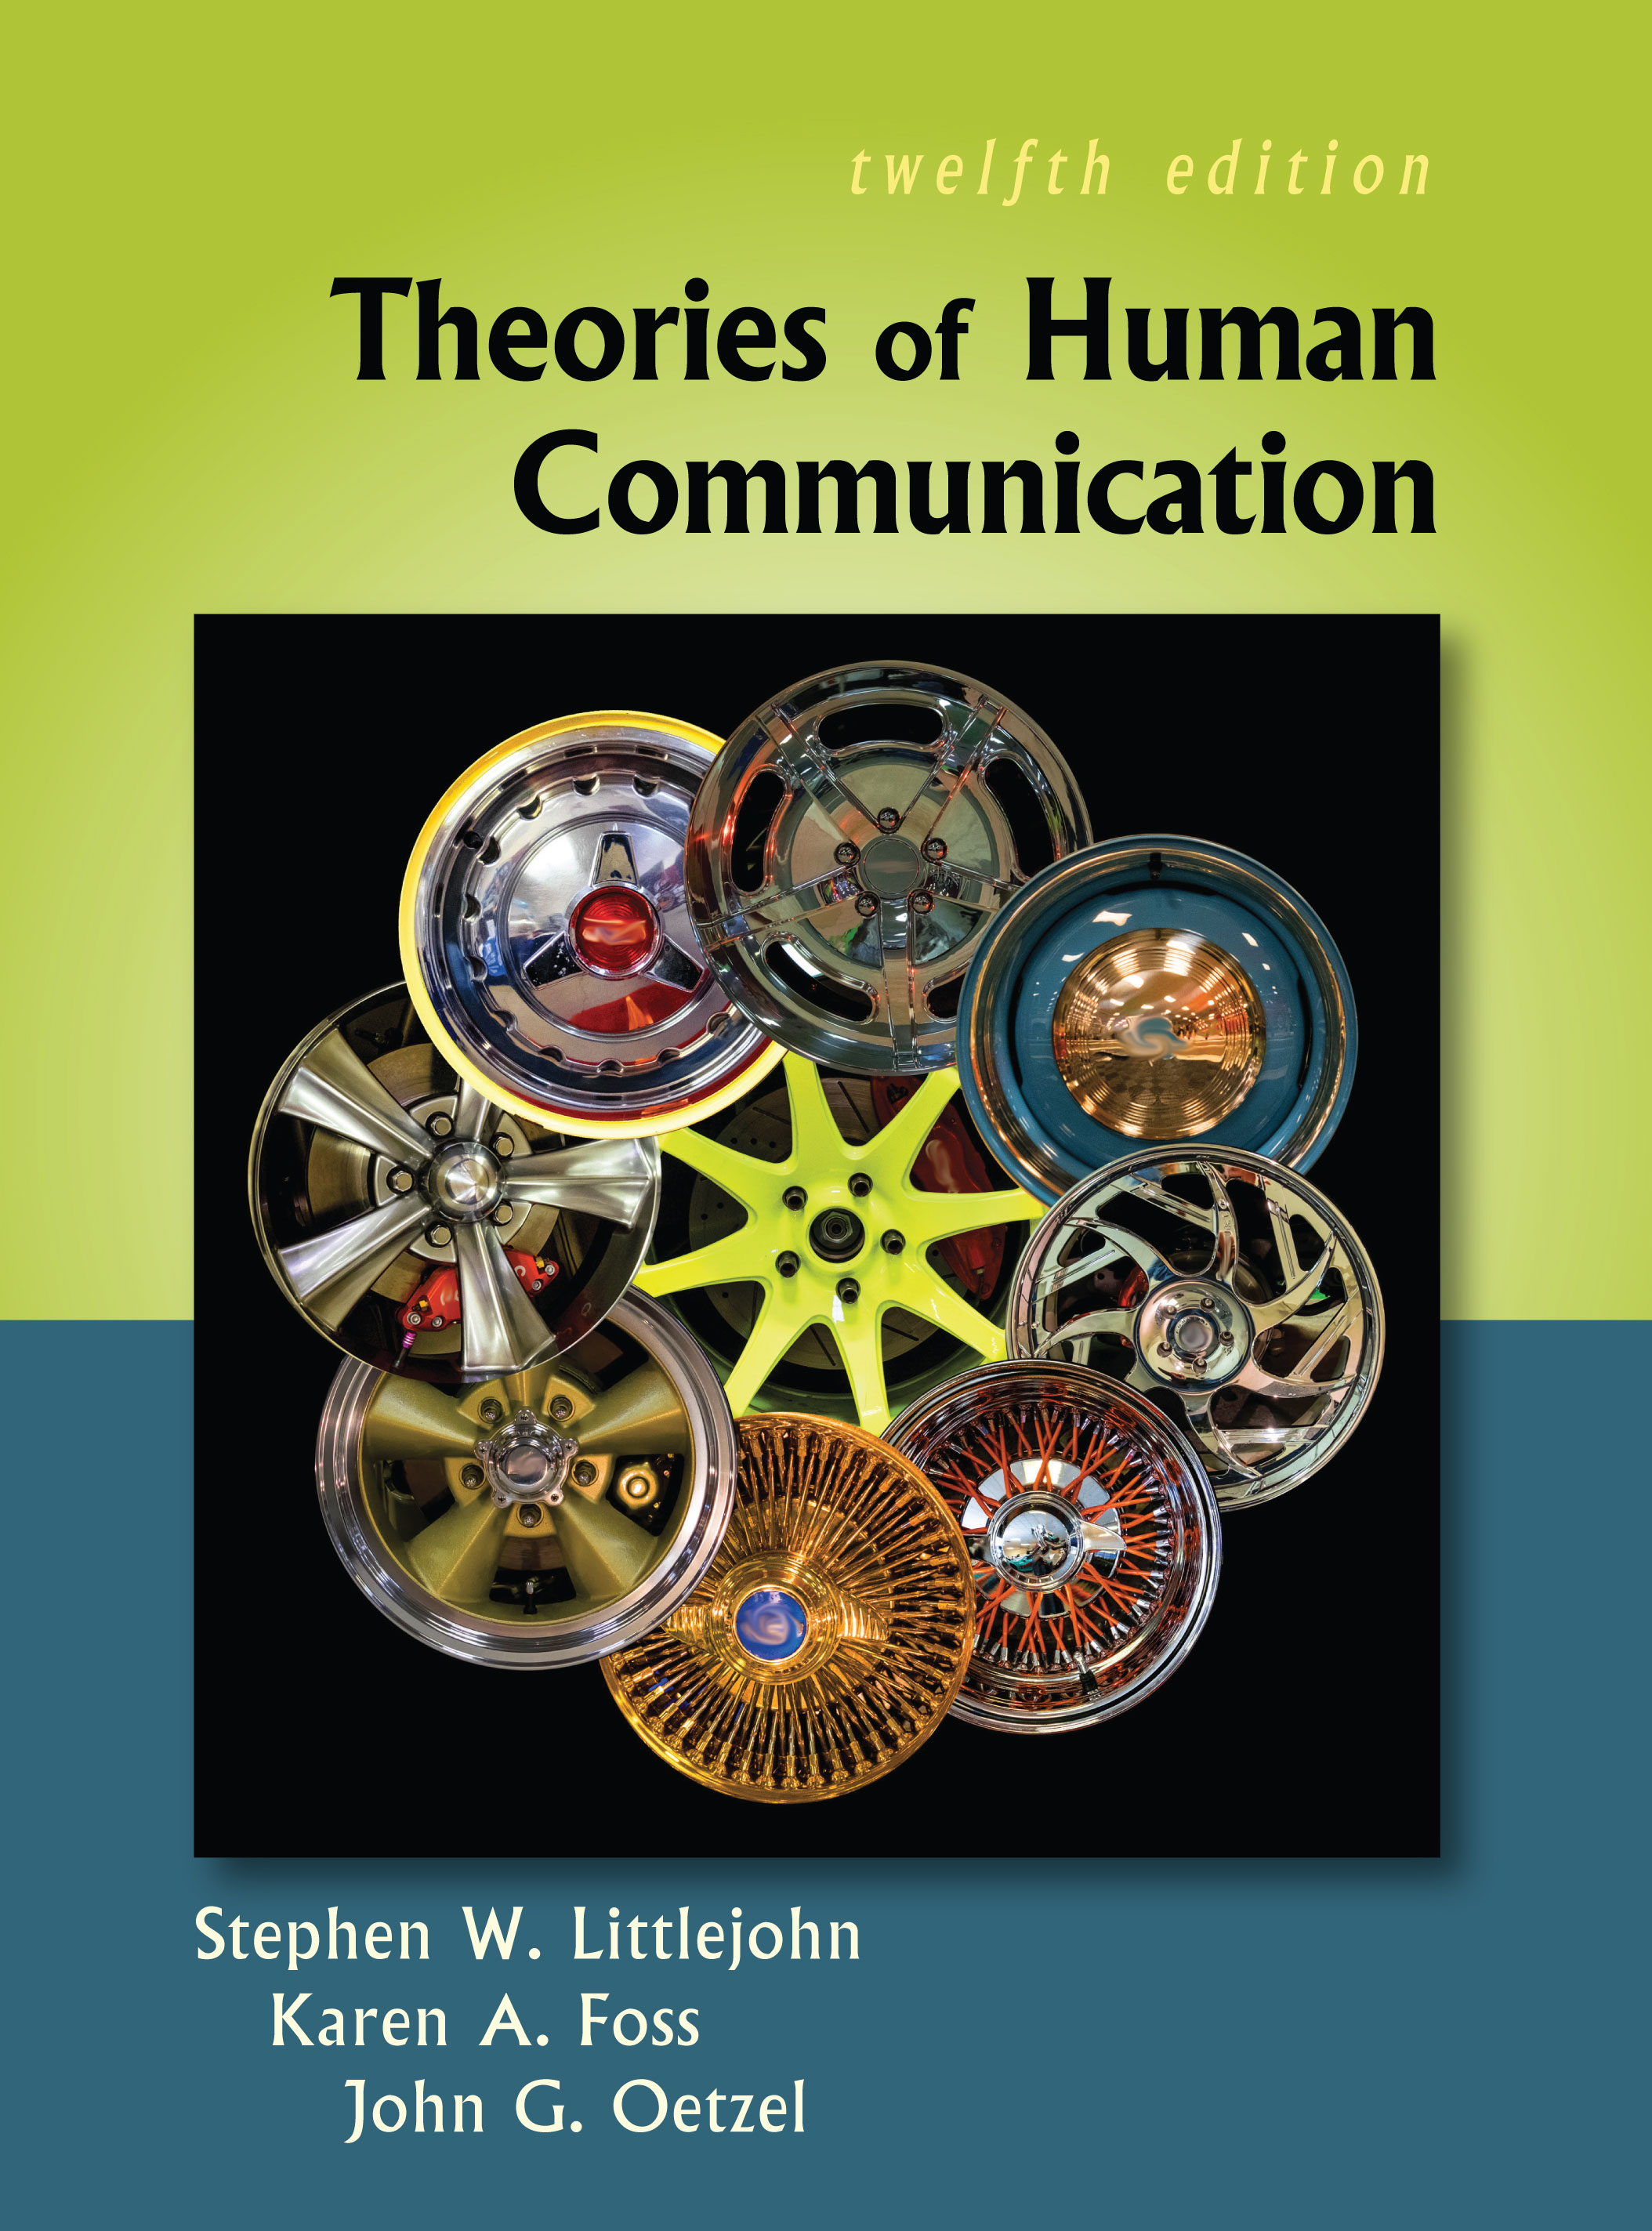 Theories of Human Communication: Twelfth Edition by Stephen W. Littlejohn, Karen A. Foss, John G. Oetzel